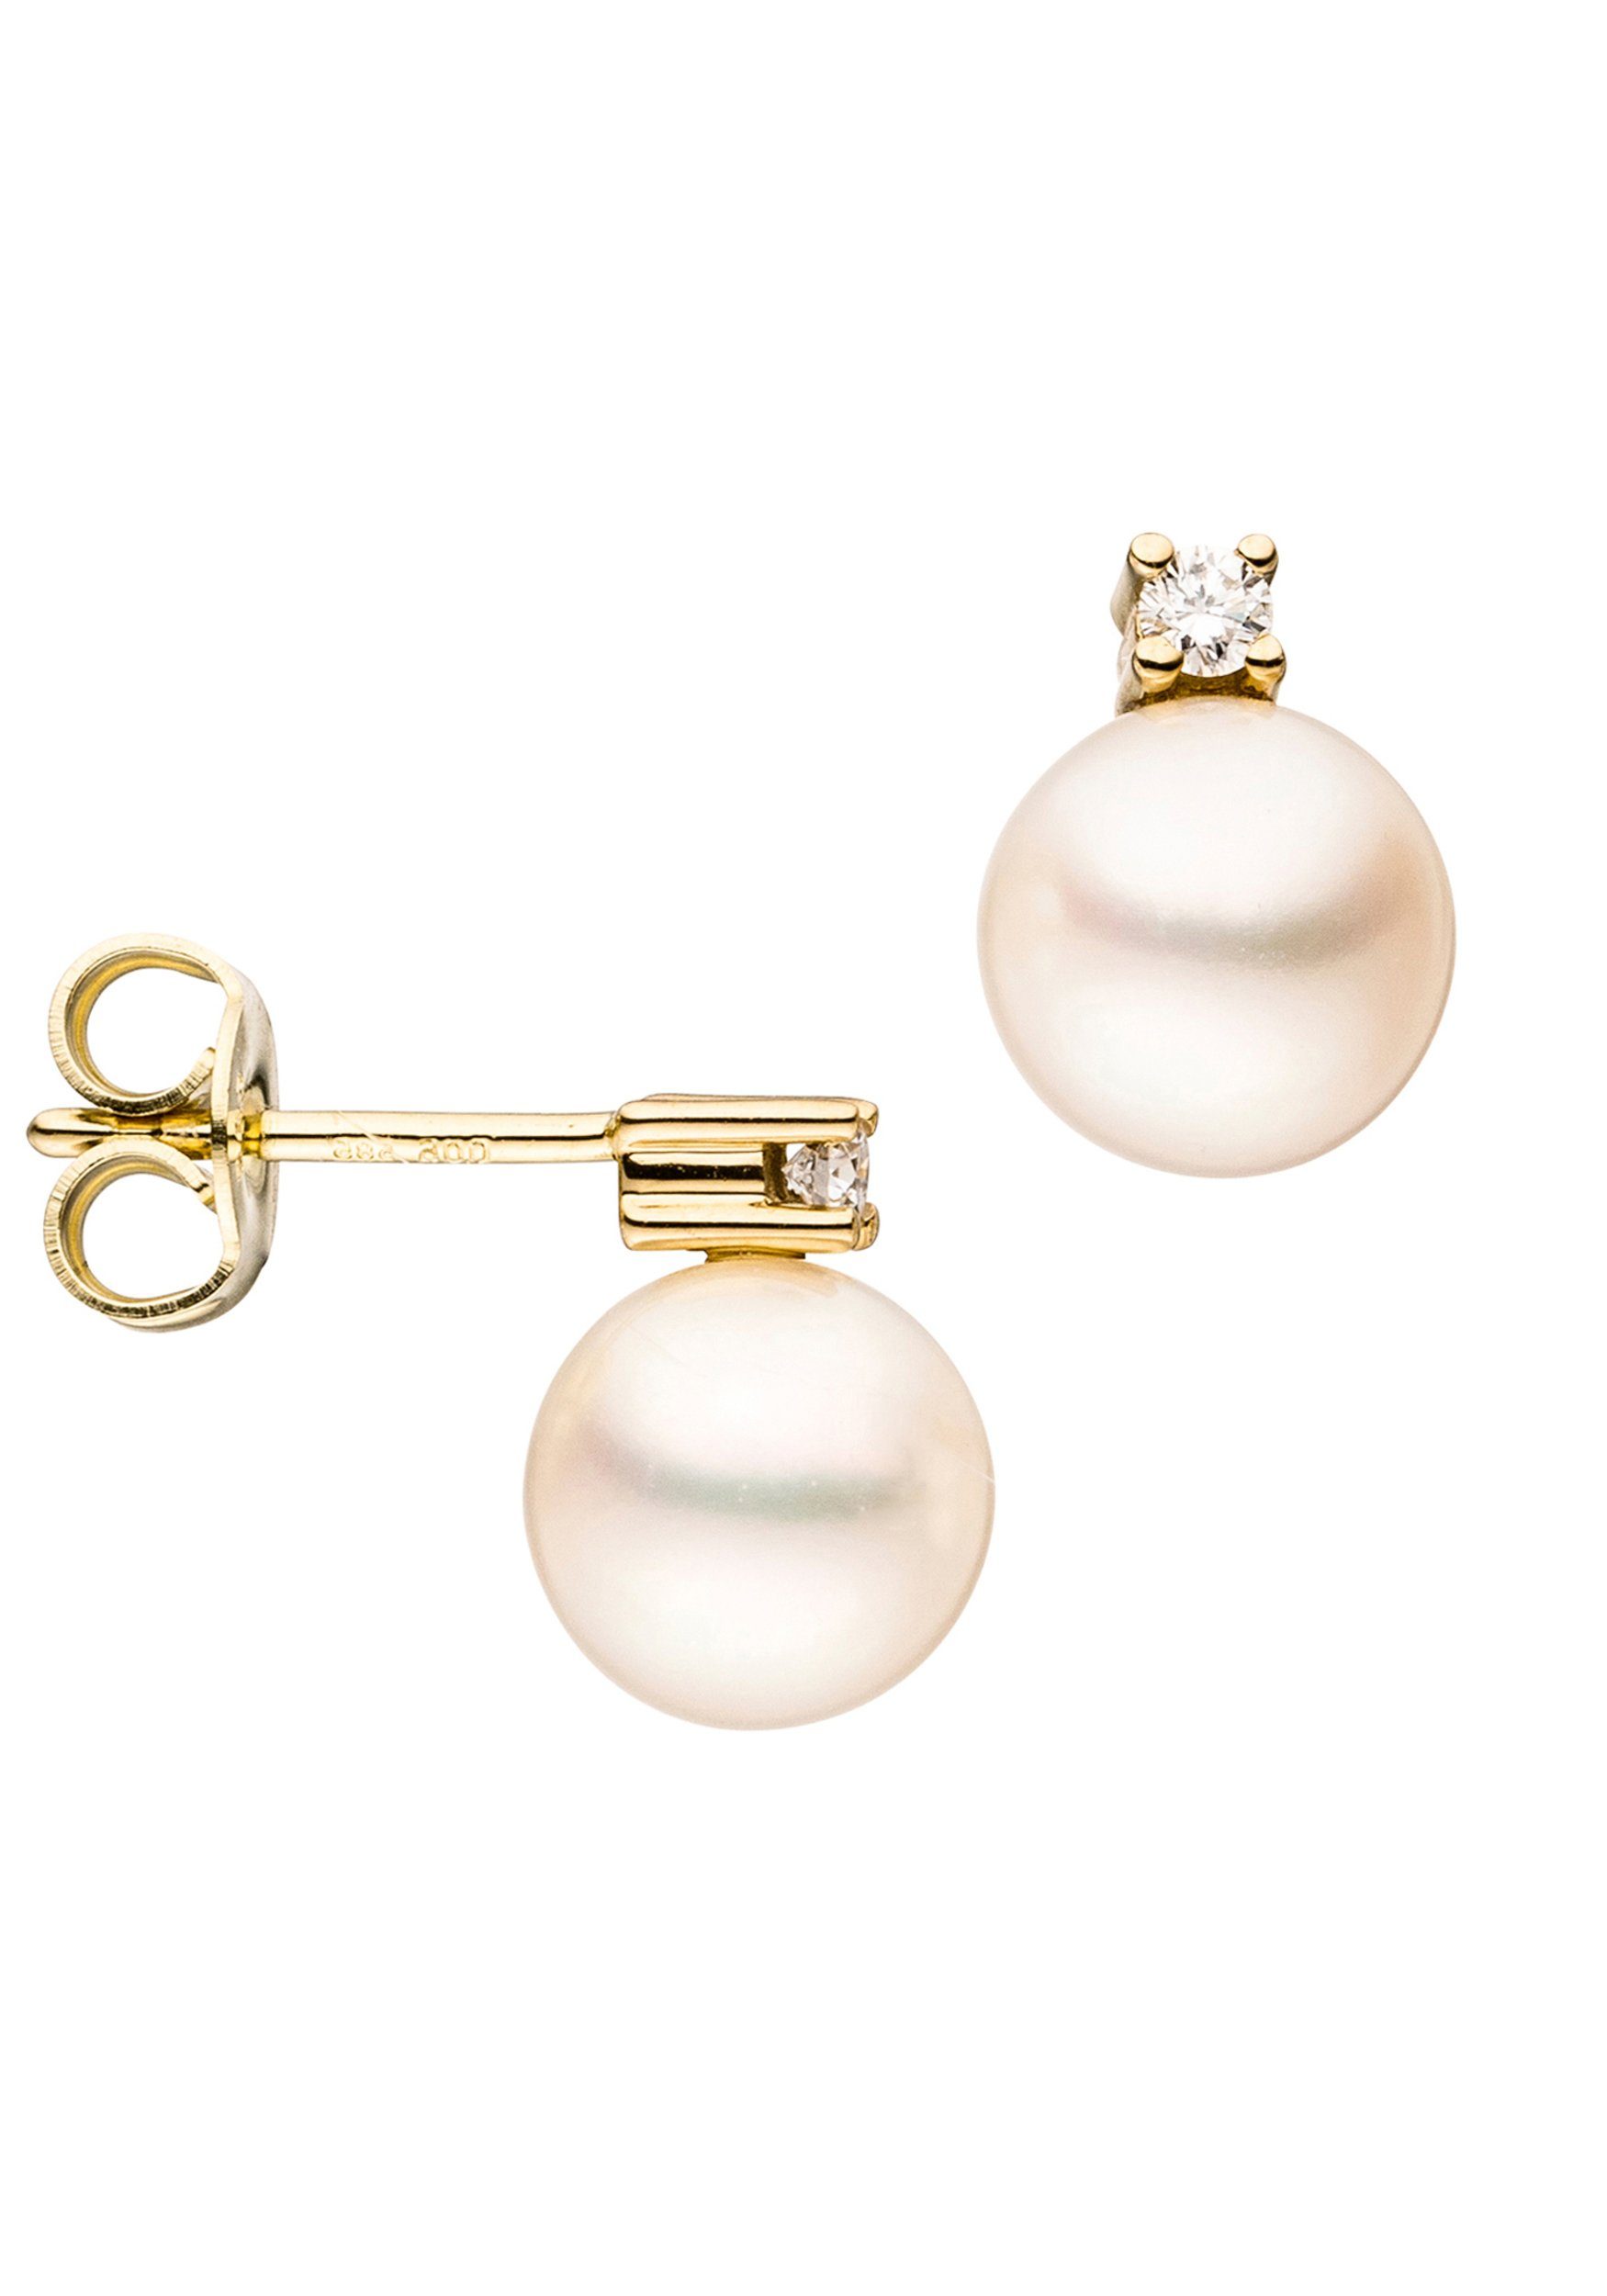 JOBO Perlenohrringe Ohrringe mit Perlen und Diamanten, 585 Gold